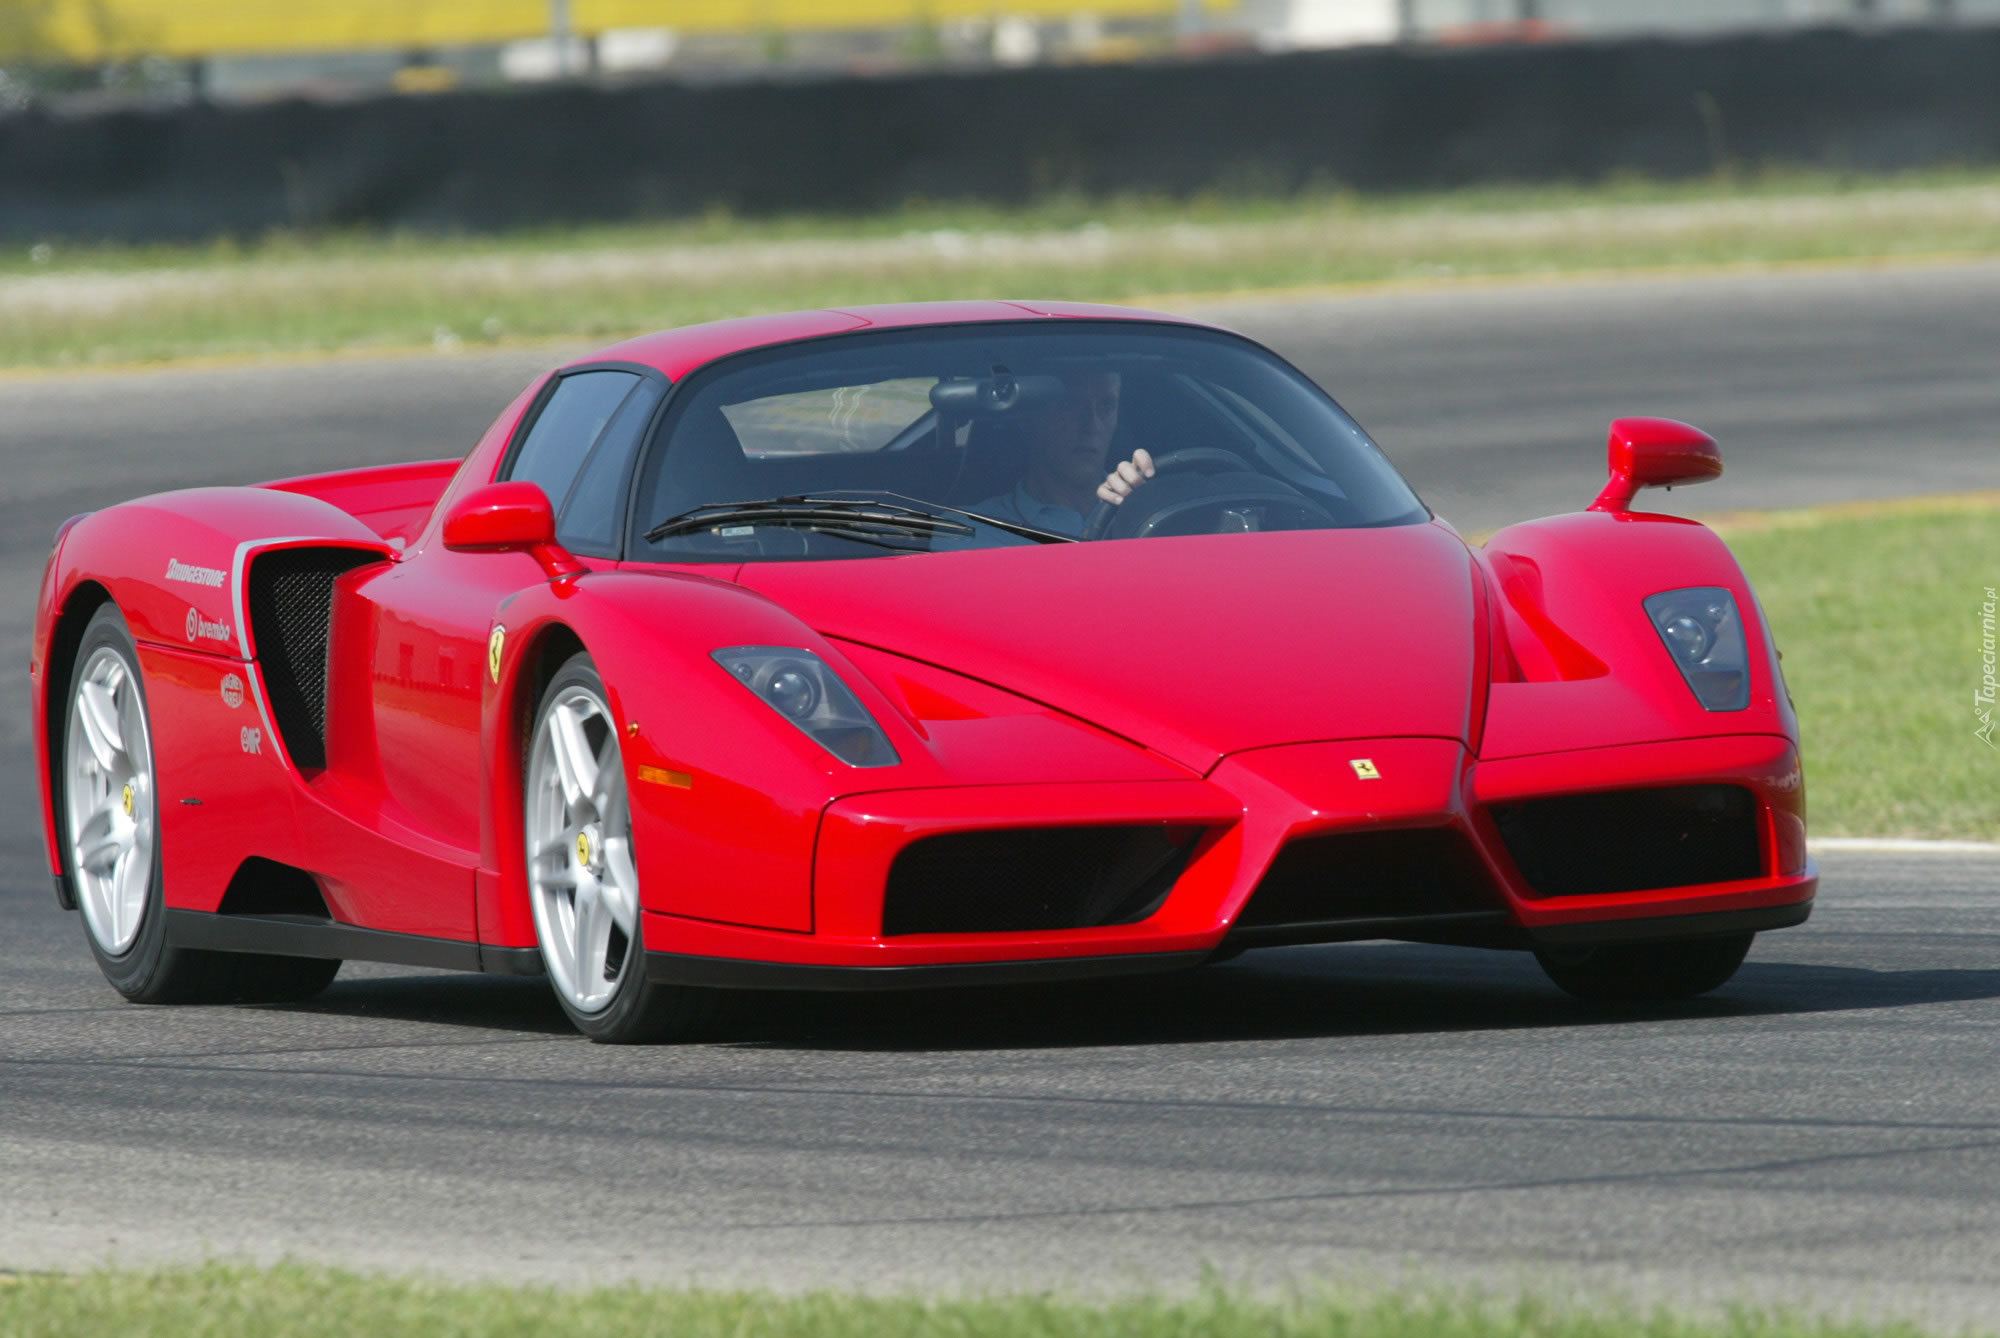 Ferrari Enzo, F60